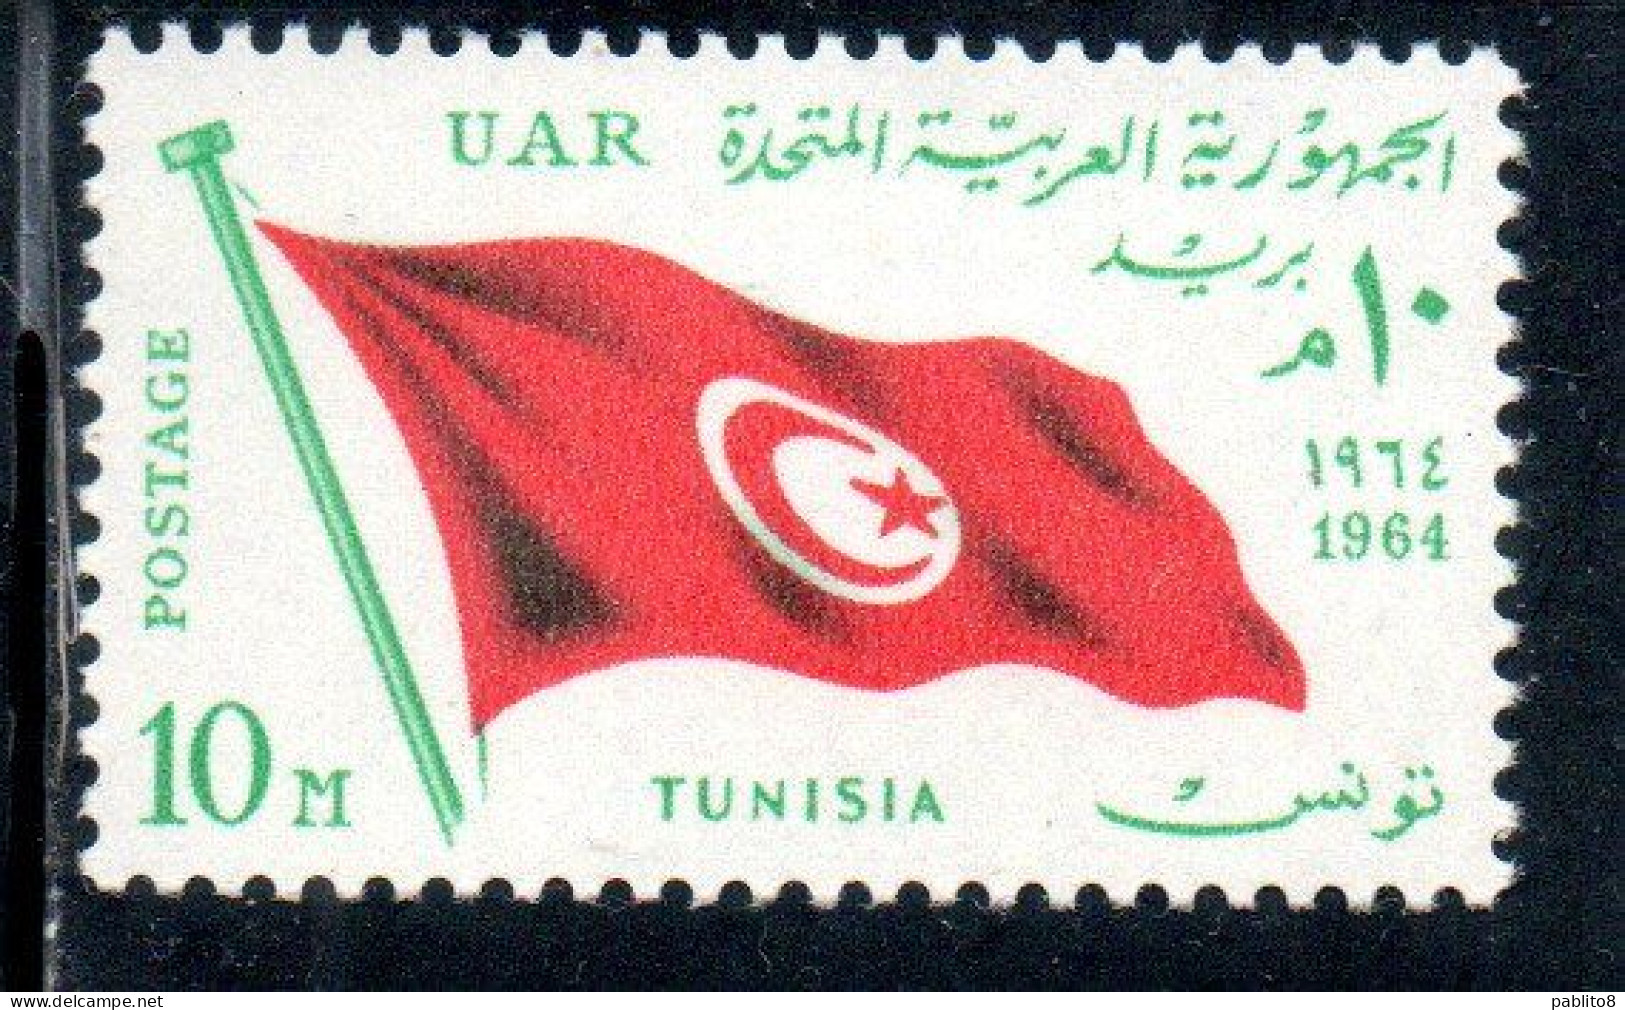 UAR EGYPT EGITTO 1964 SECOND MEETING OF HEADS STATE ARAB LEAGUE FLAG OF TUNISIA 10m MNH - Ongebruikt